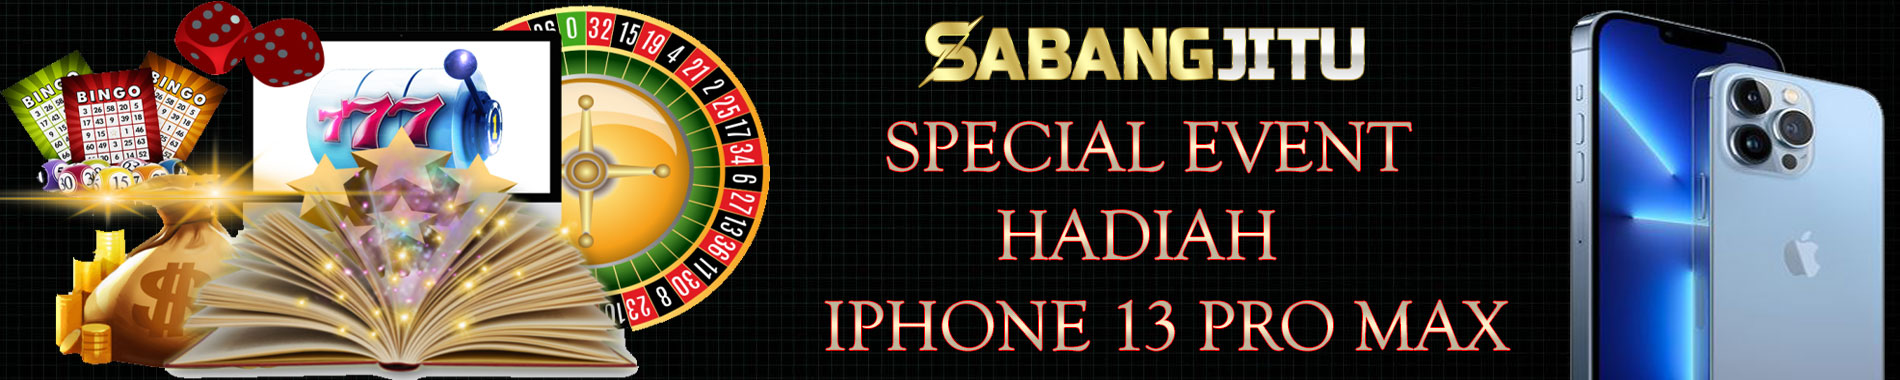 SABANGJITU - Even Turn Over Hadiah Iphone 13 Pro Max